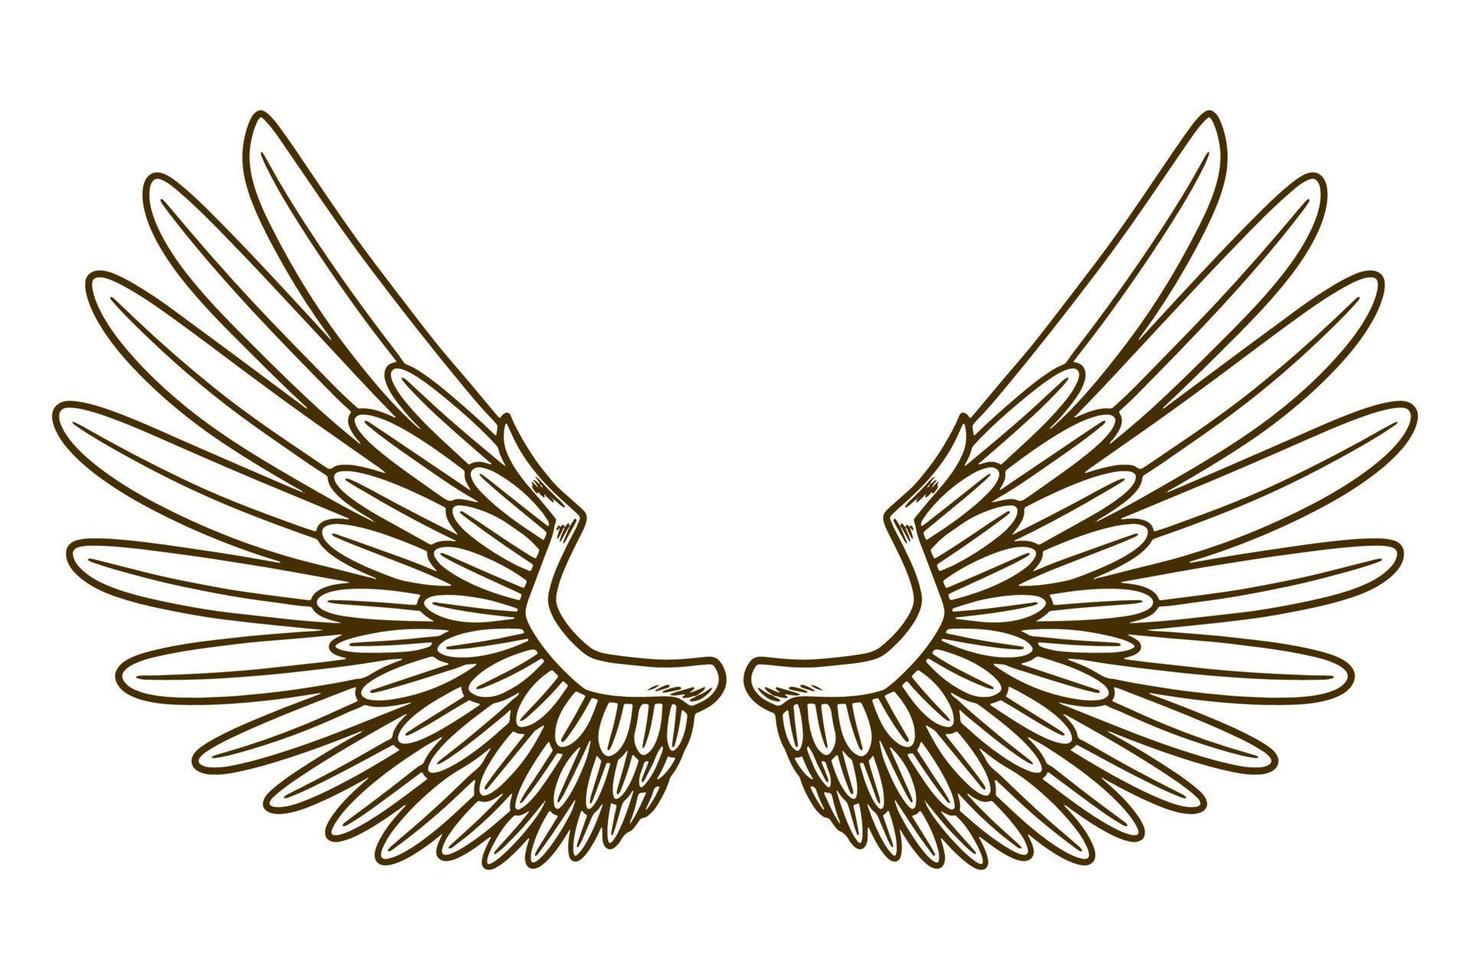 eagle wing vector illustration